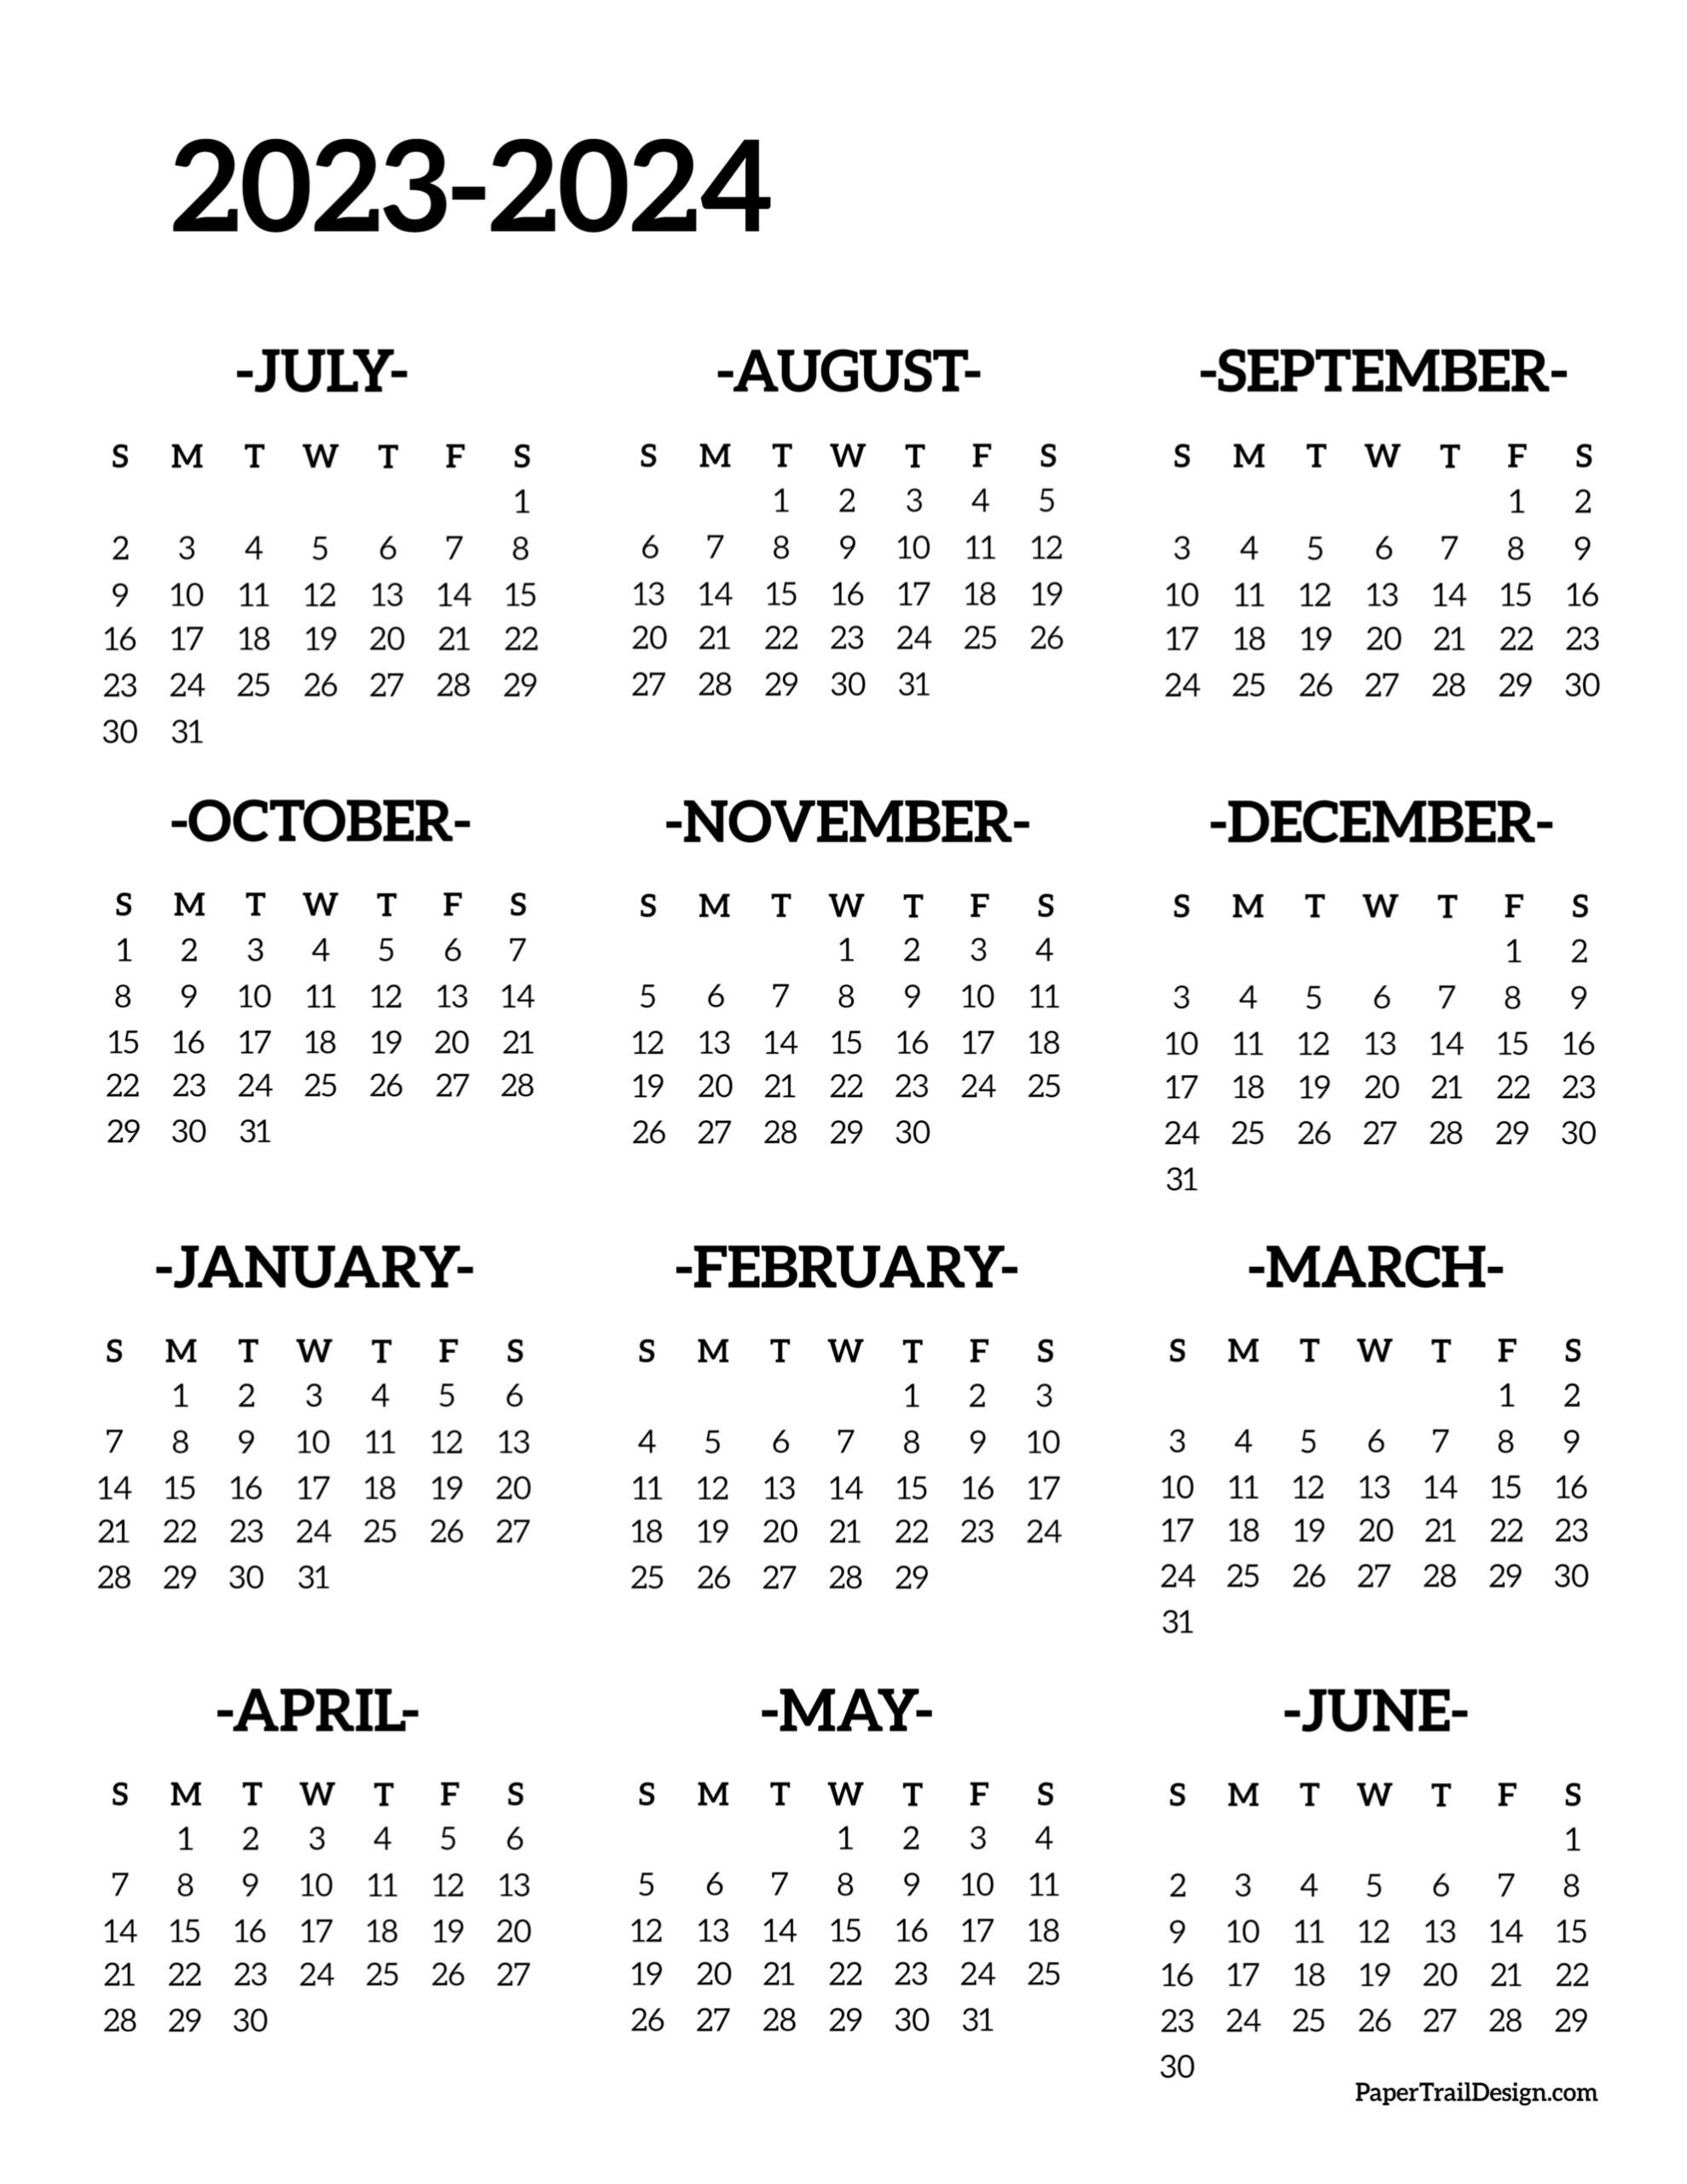 2023-2024 School Year Calendar Free Printable - Paper Trail Design for 2023 And 2024 Calendar Printable